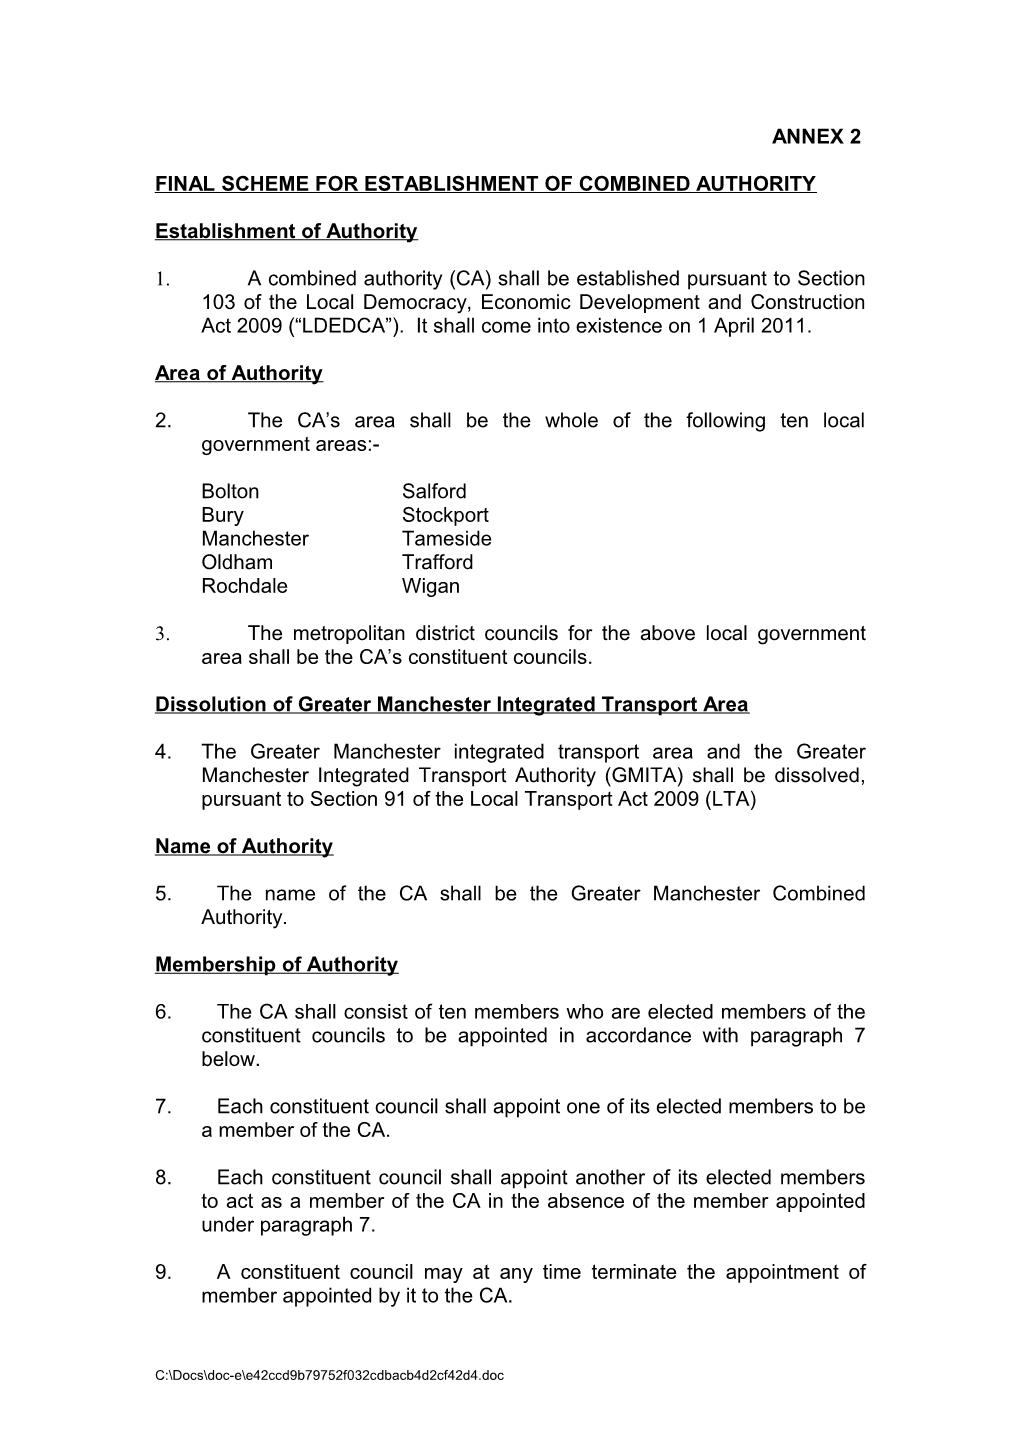 Draft Scheme for Establishment of Combined Authority